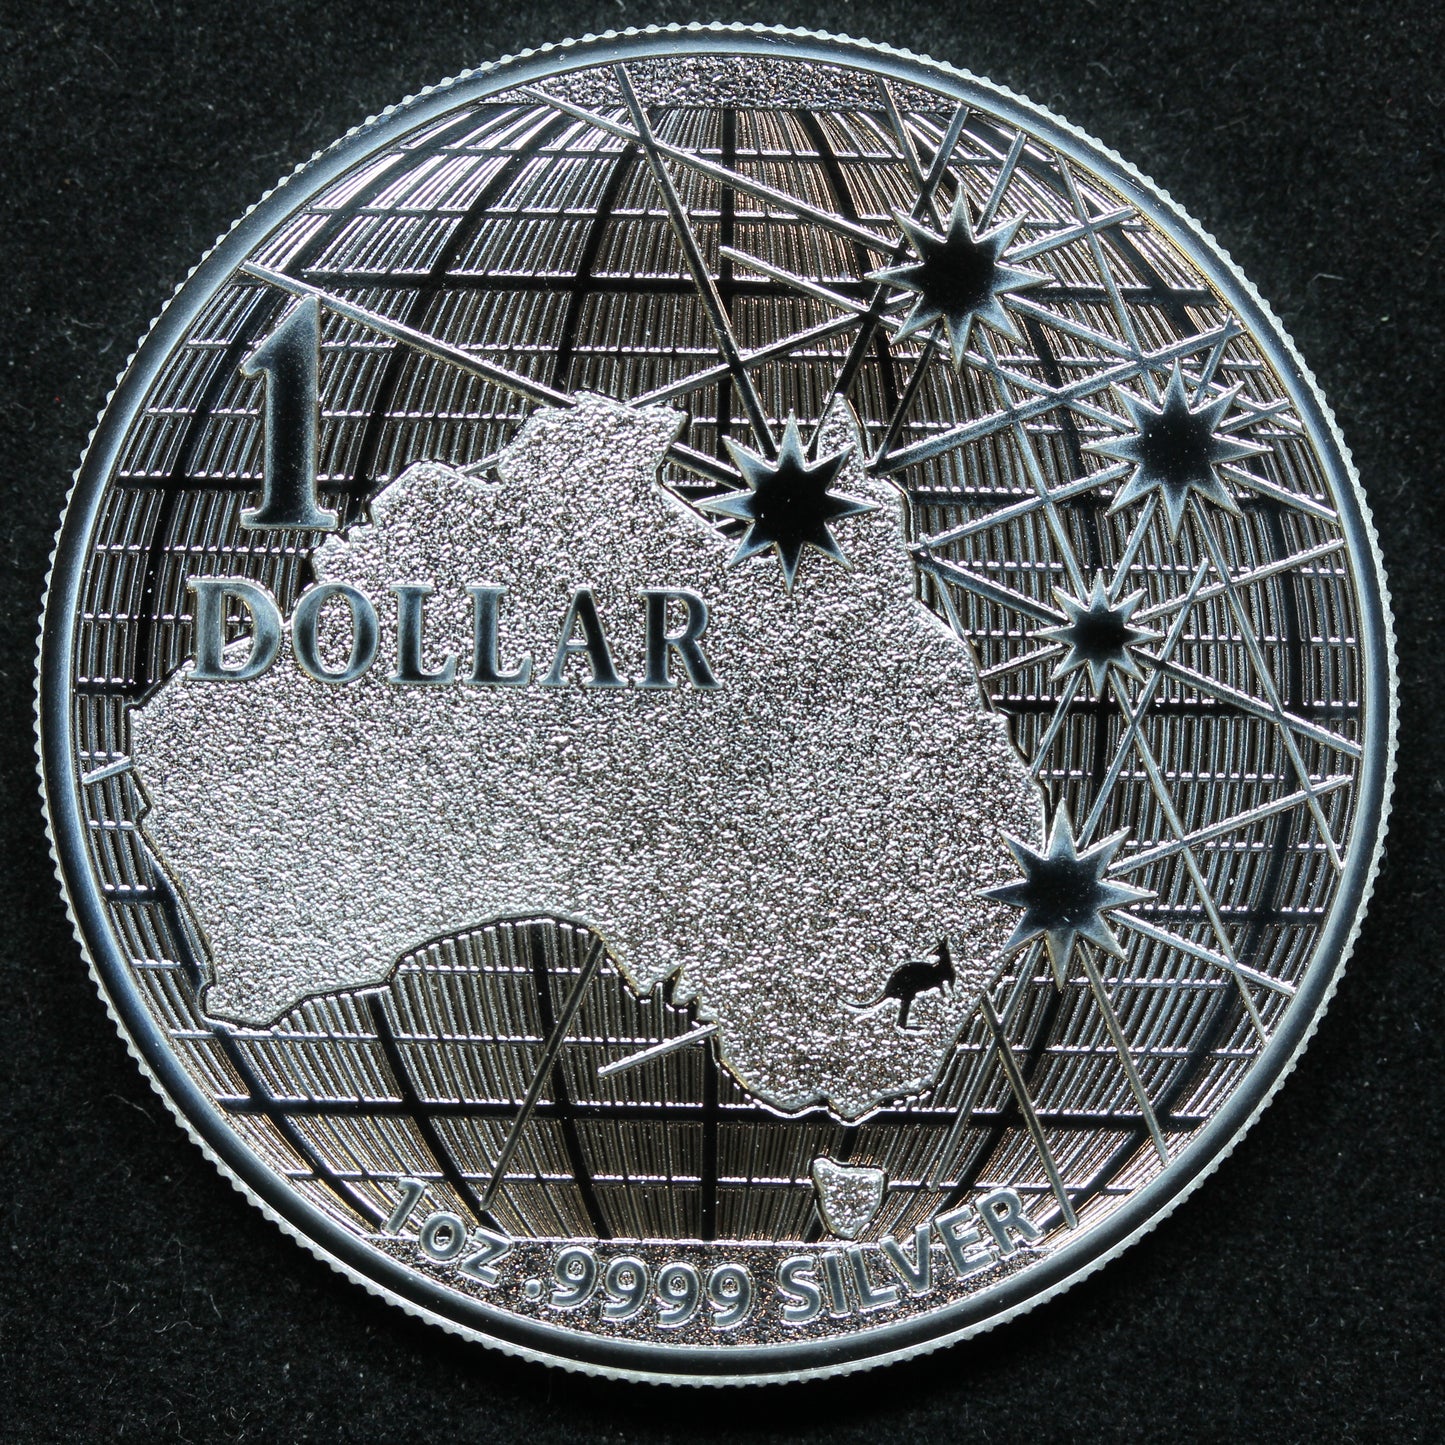 2020 Australia BENEATH THE SOUTHERN SKIES $1 BU Coin .999 Fine Silver in Capsule